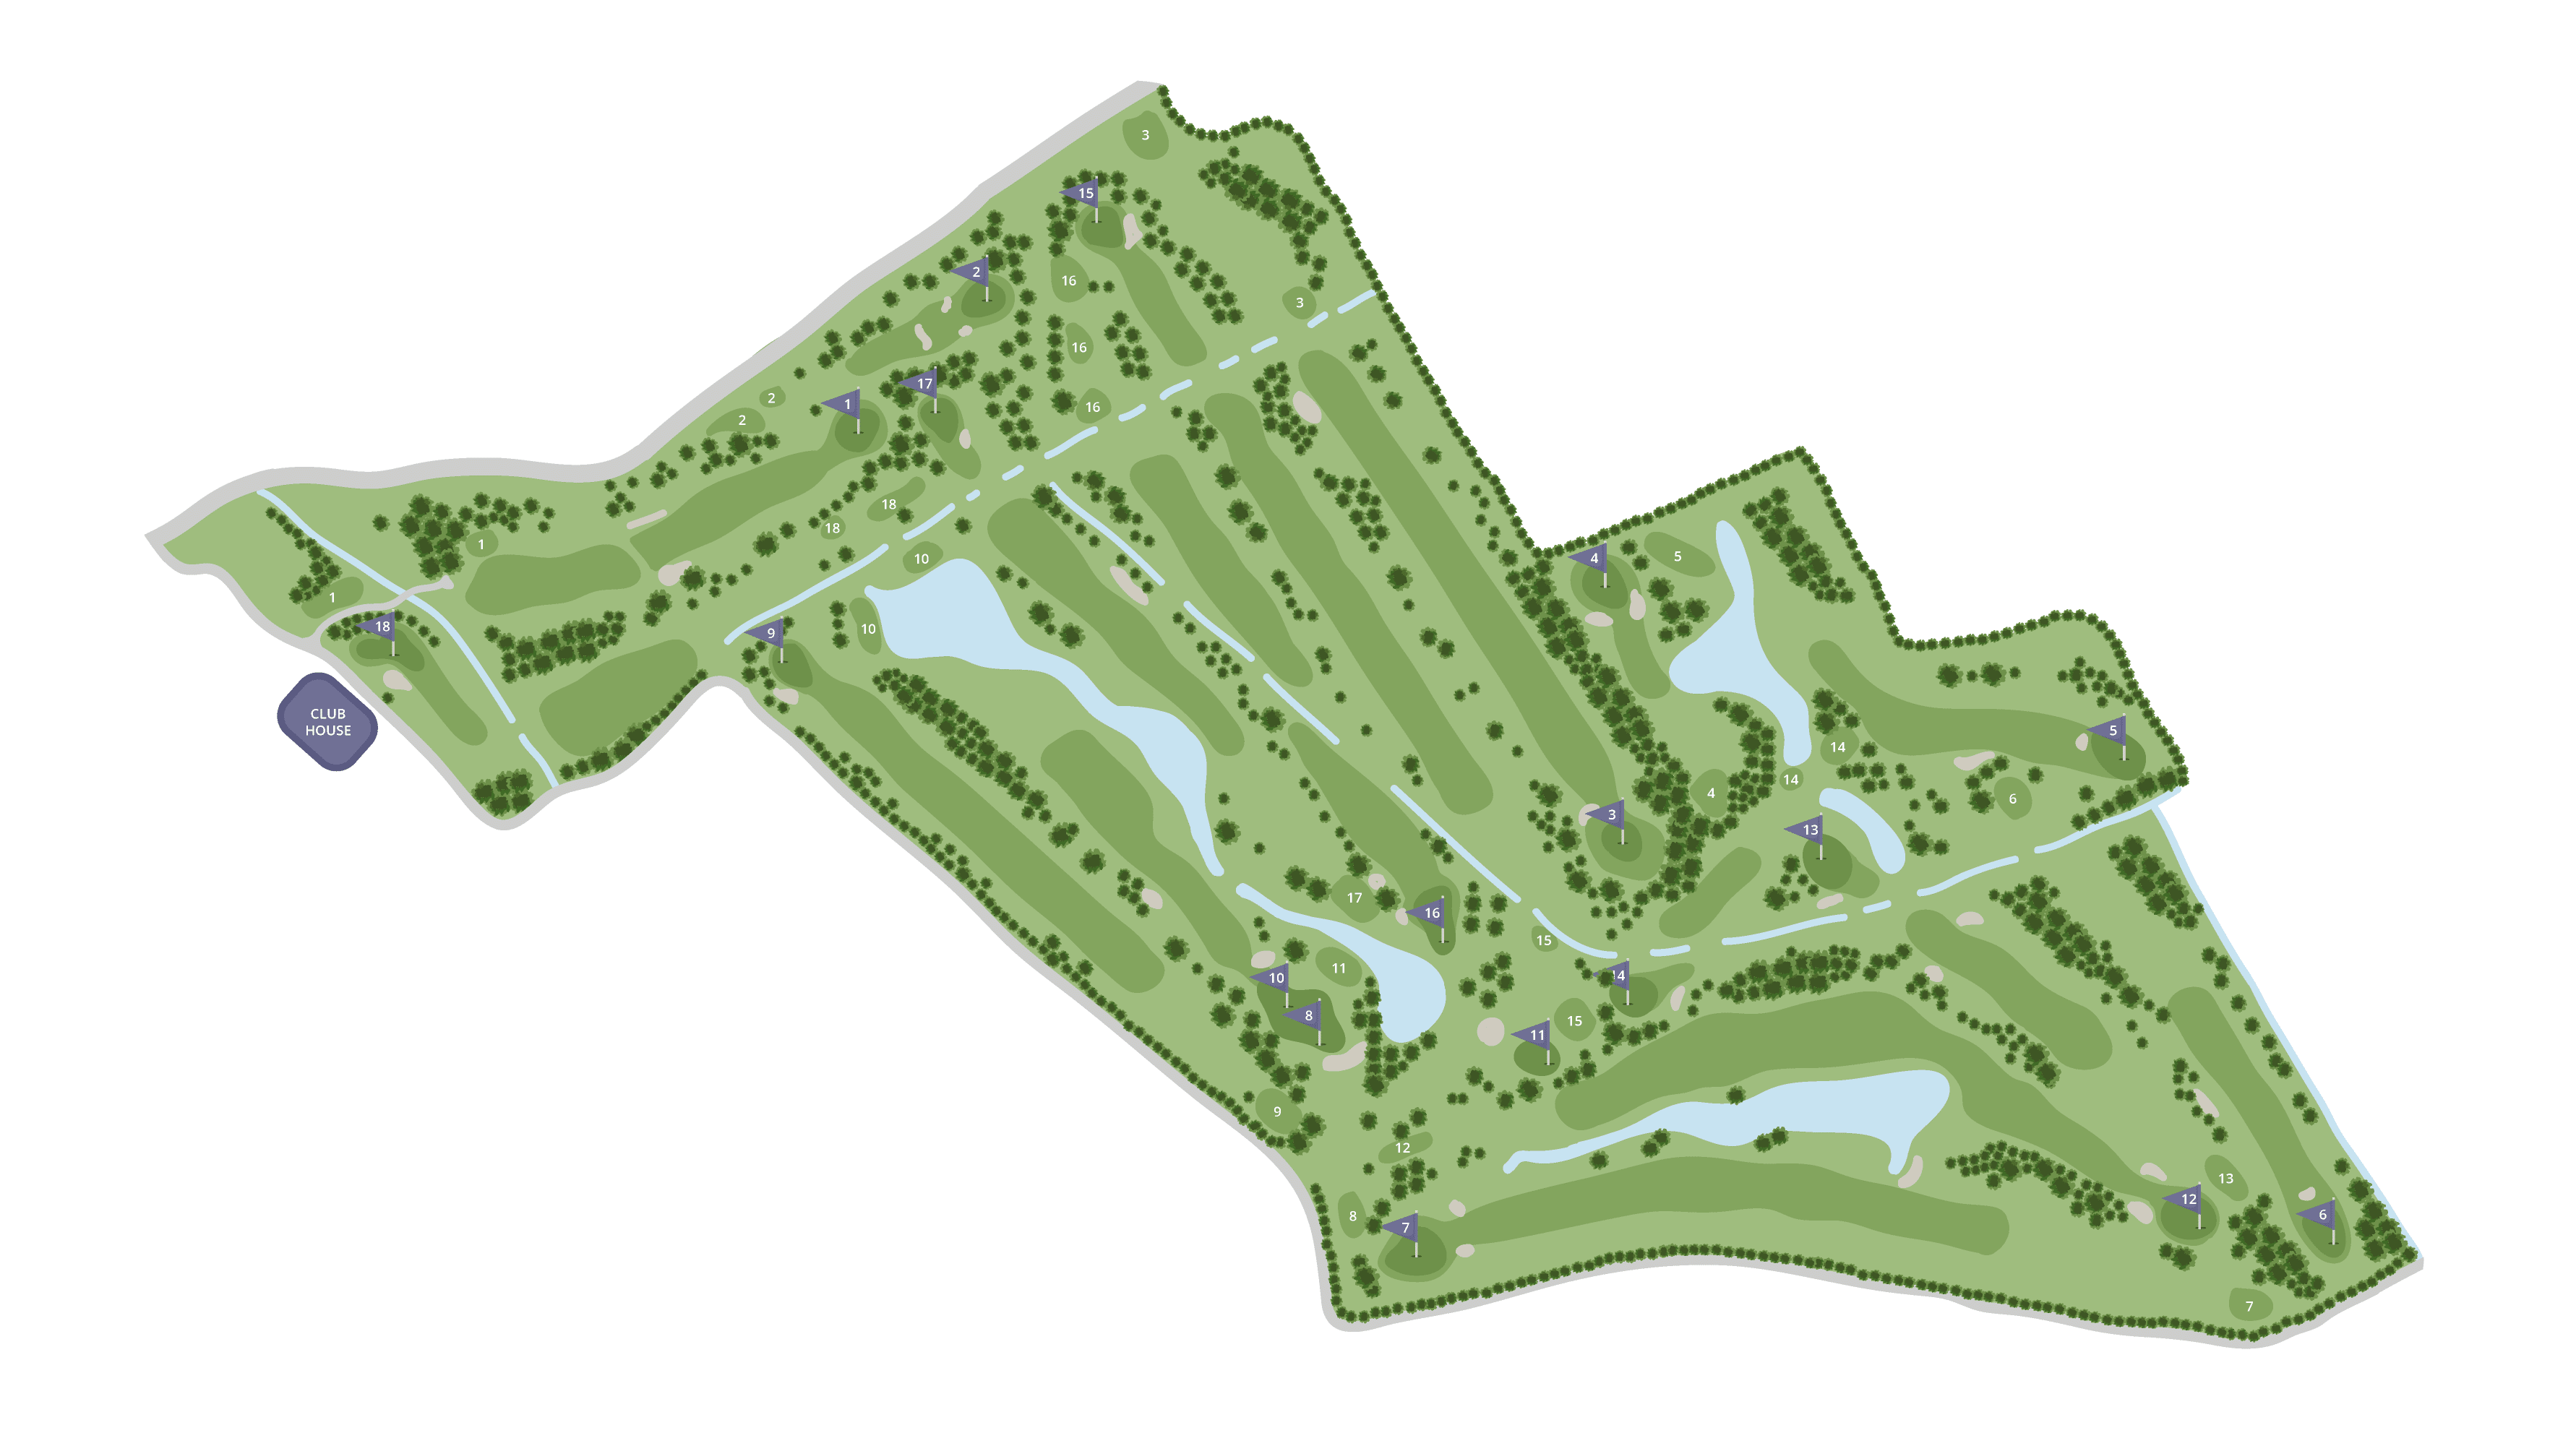 Peterstone lakes golf club